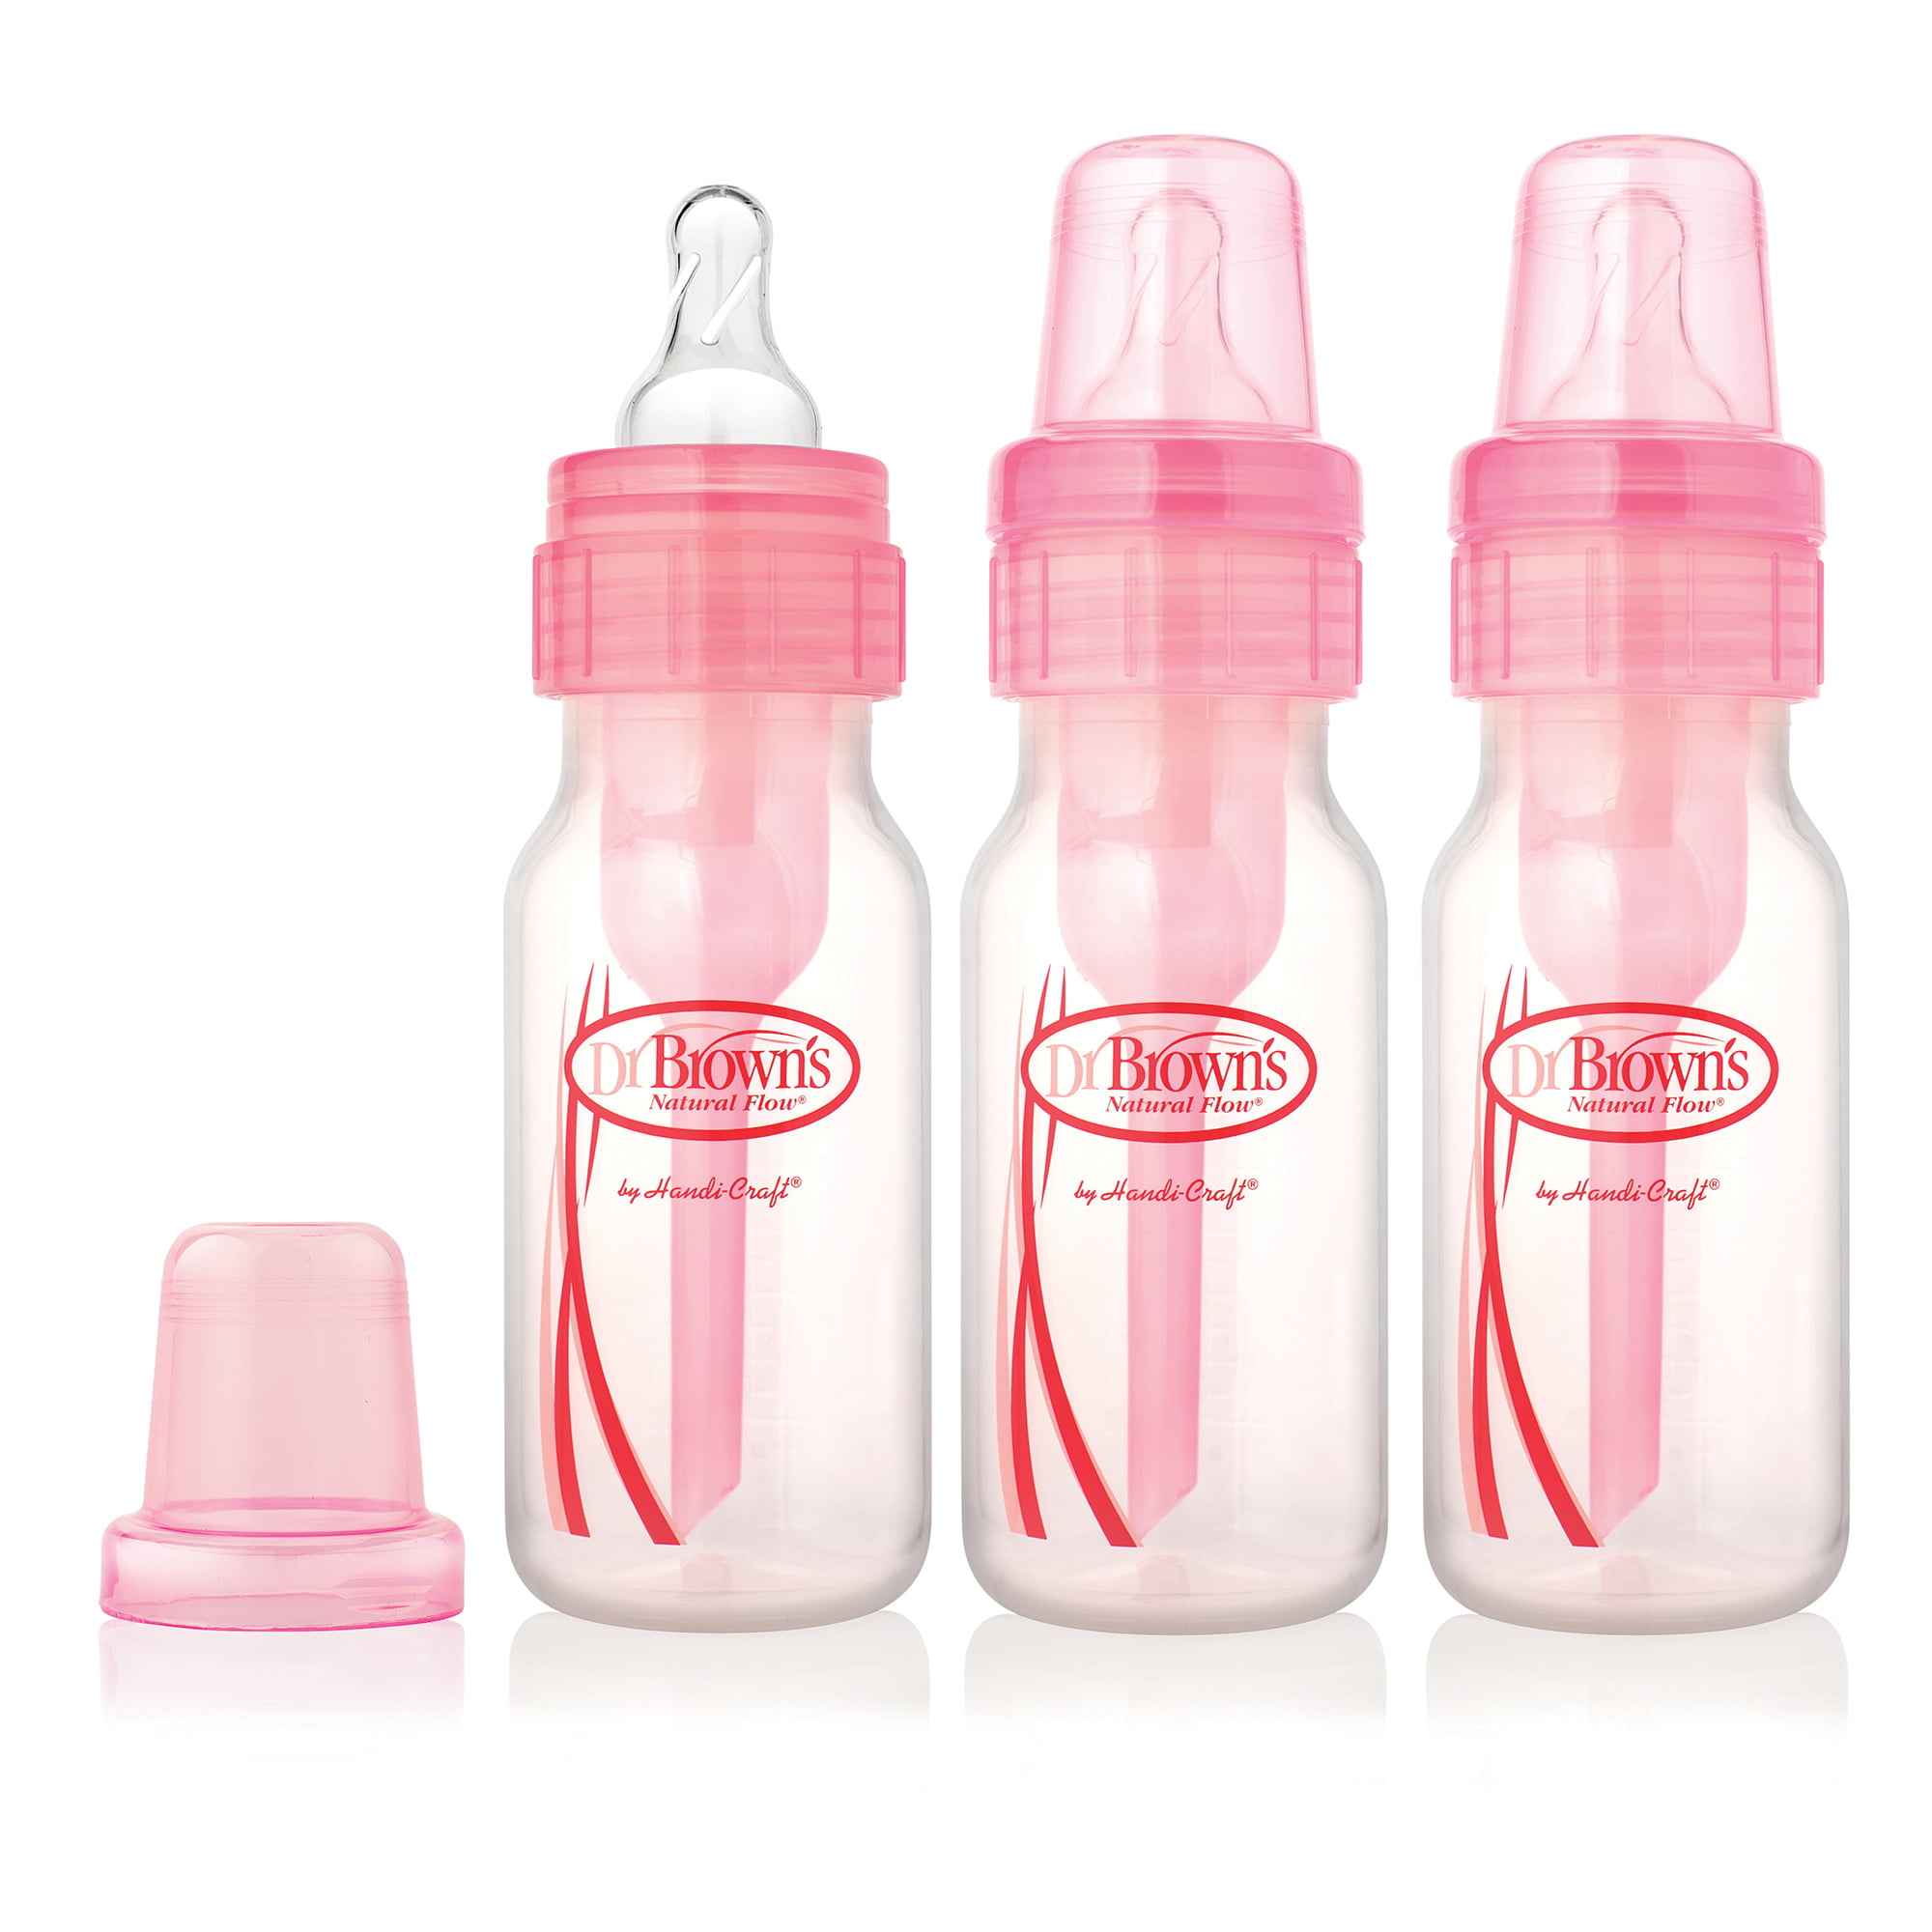 buying used baby bottles